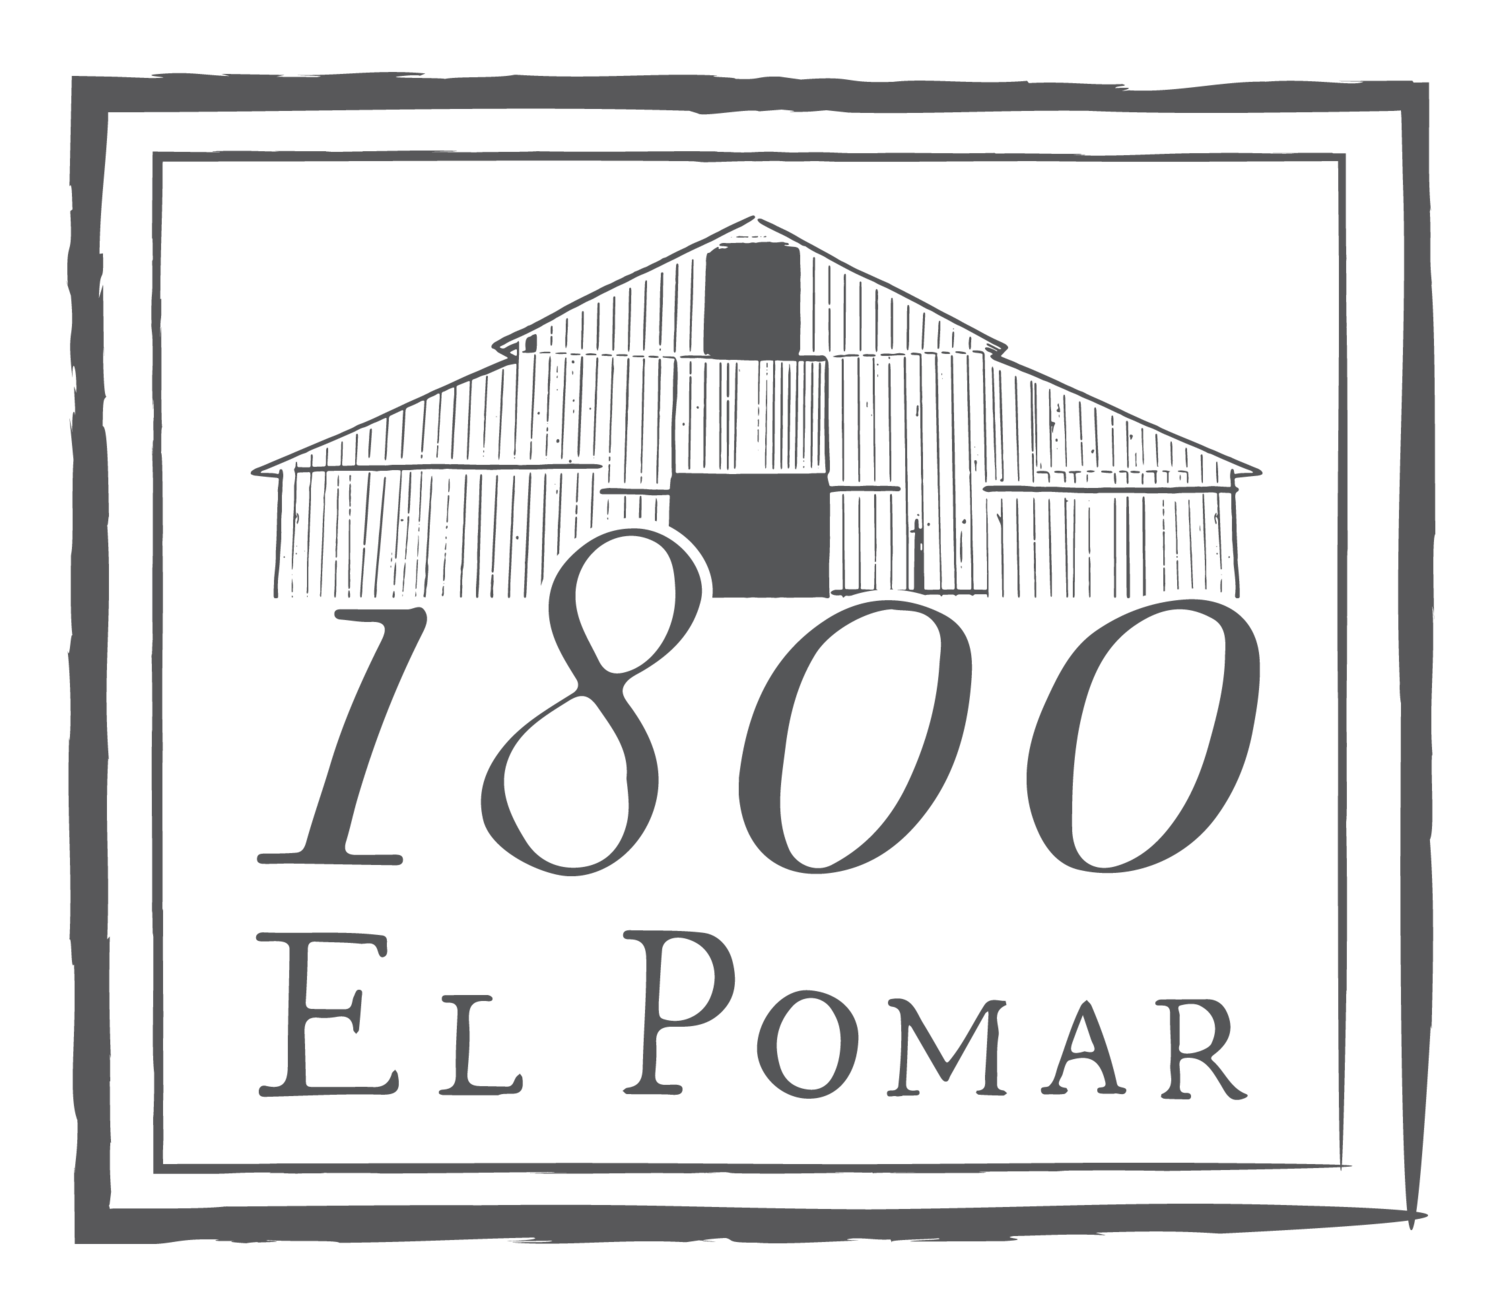 1800 El Pomar